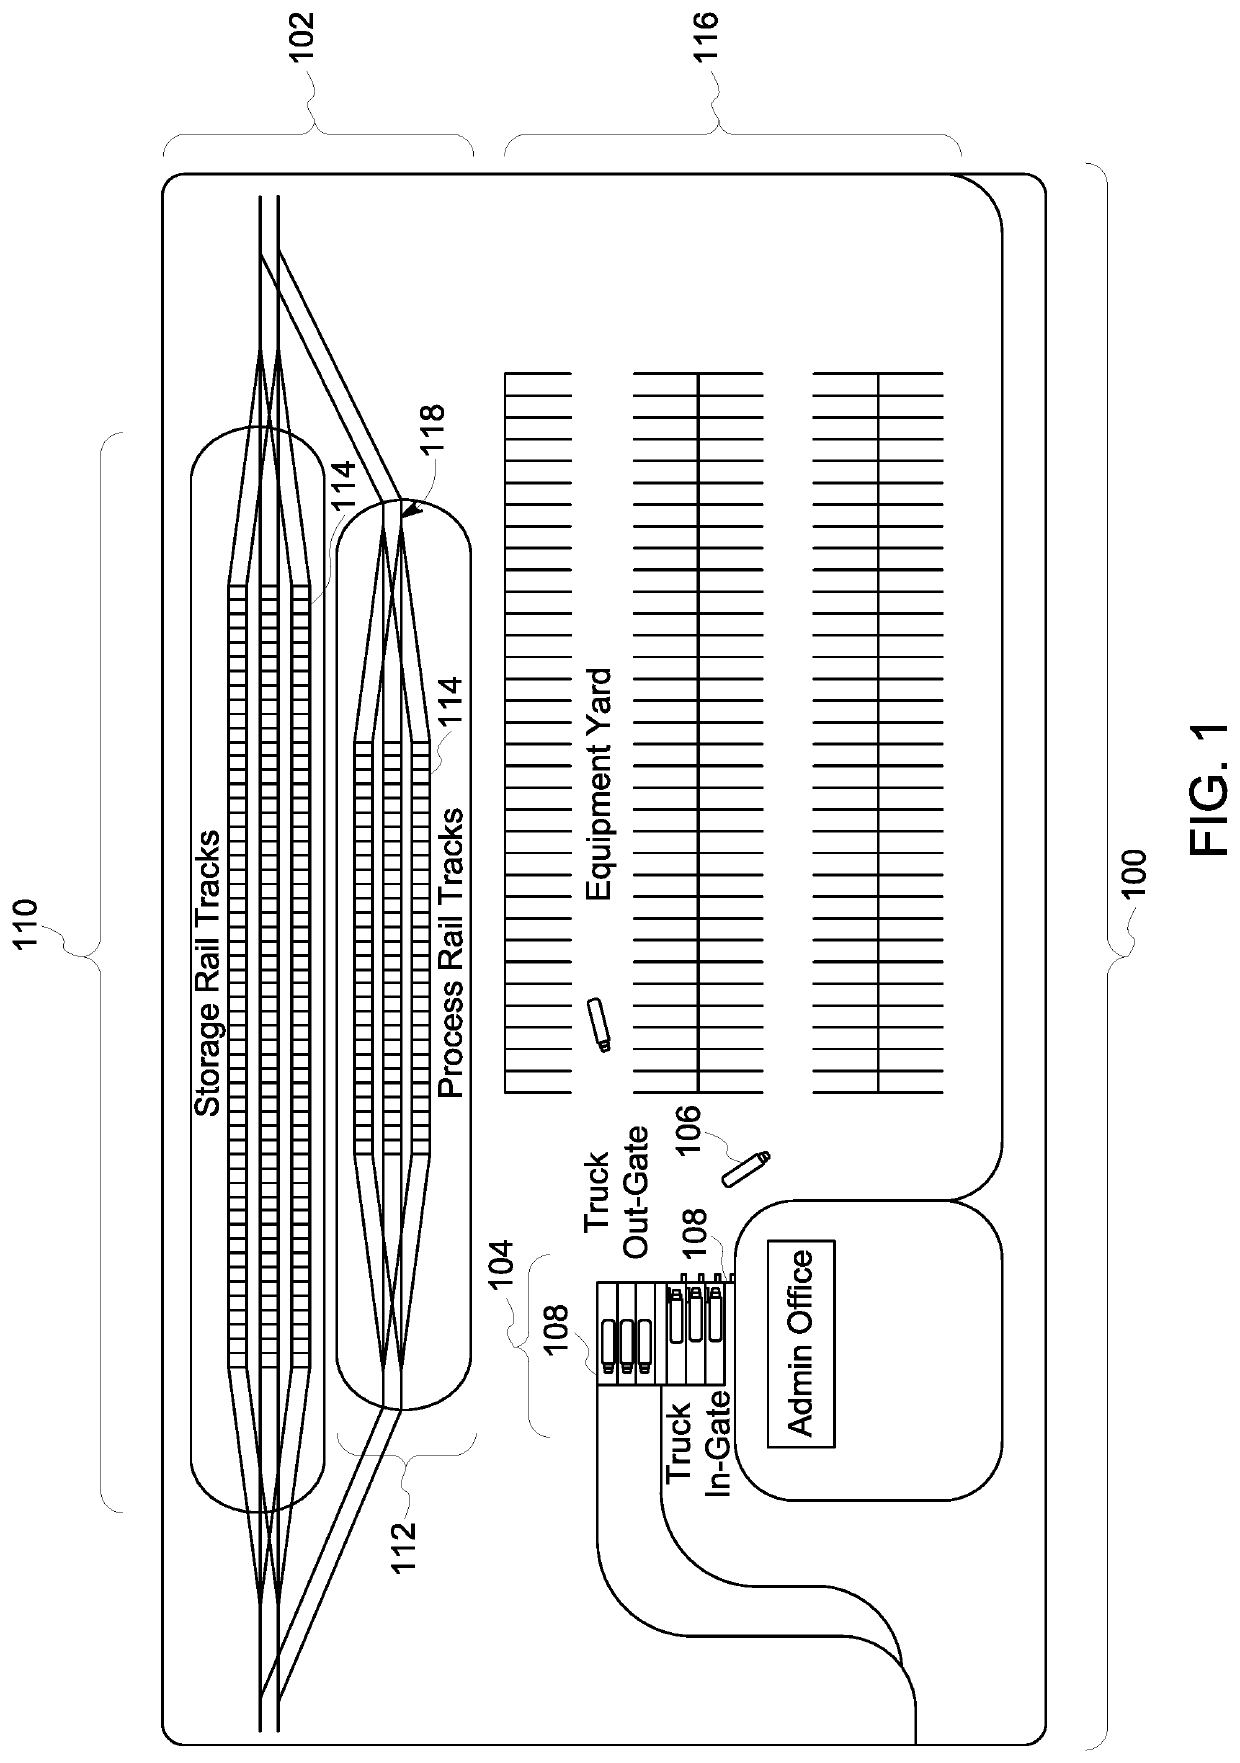 Intermodal transportation terminal control system and method